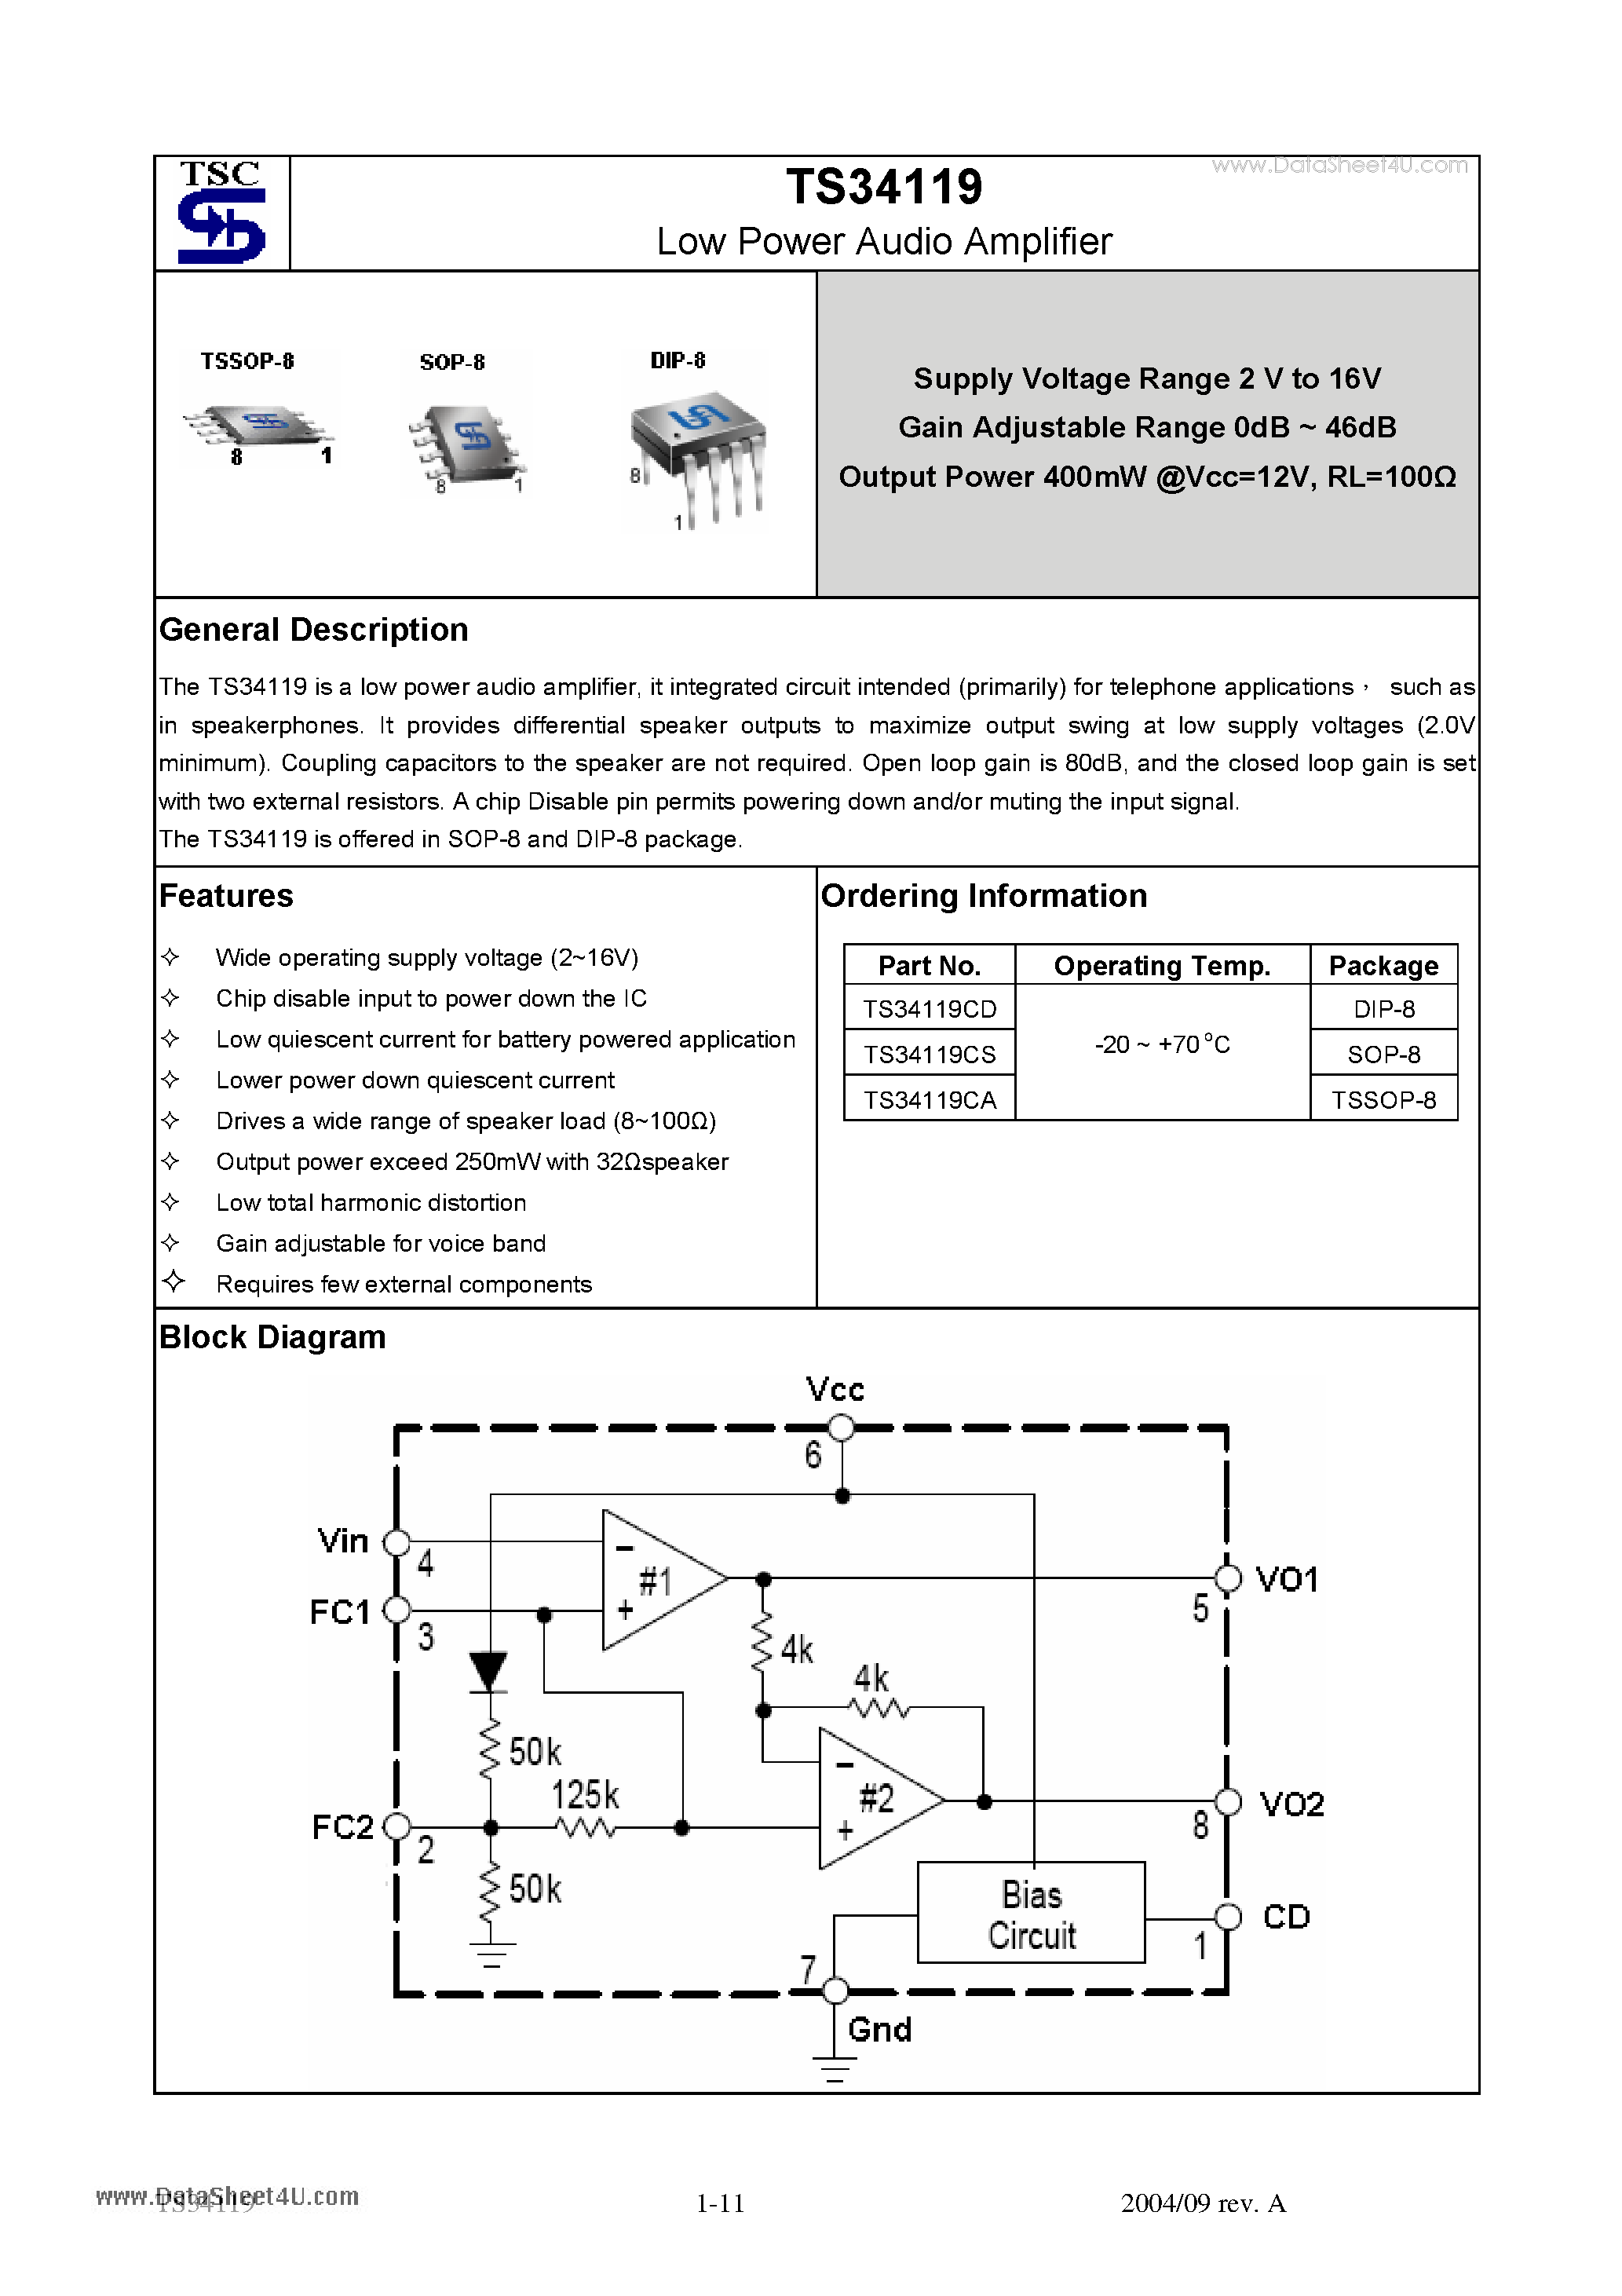 Даташит TS34119 - Low Power Audio Amplifier страница 1